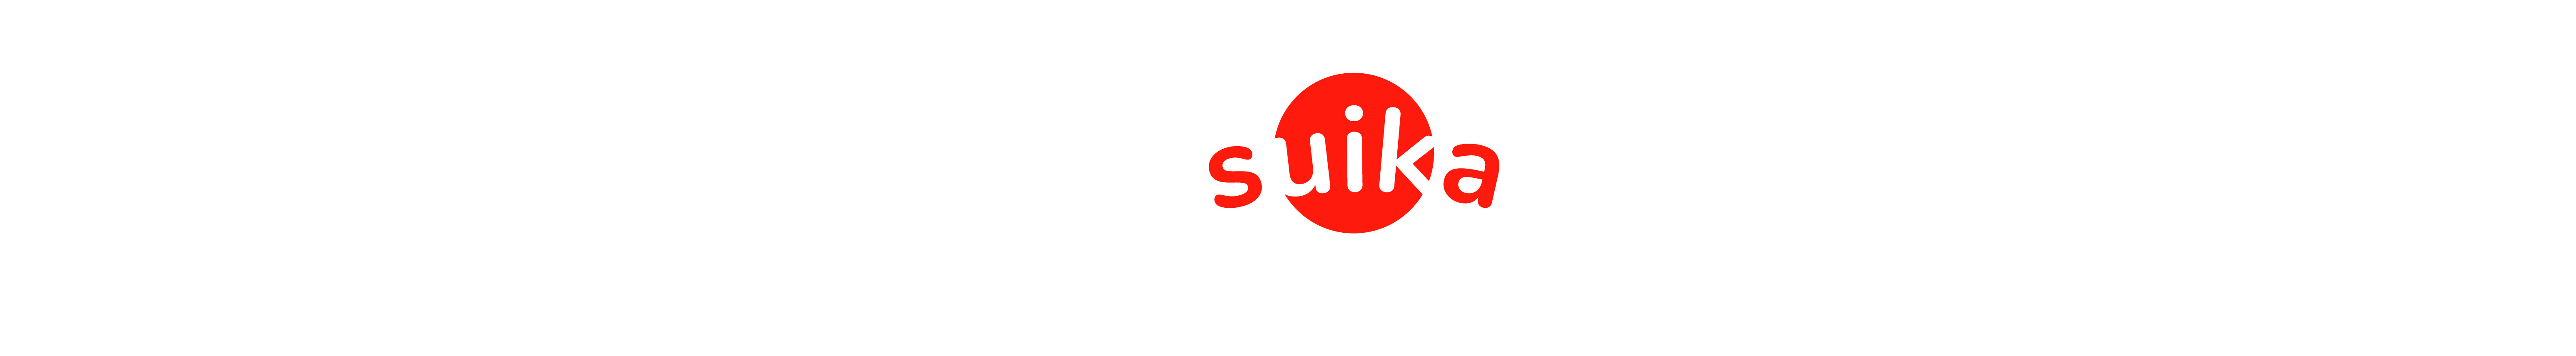 Suika (Melissa Ruiz)'s profile banner